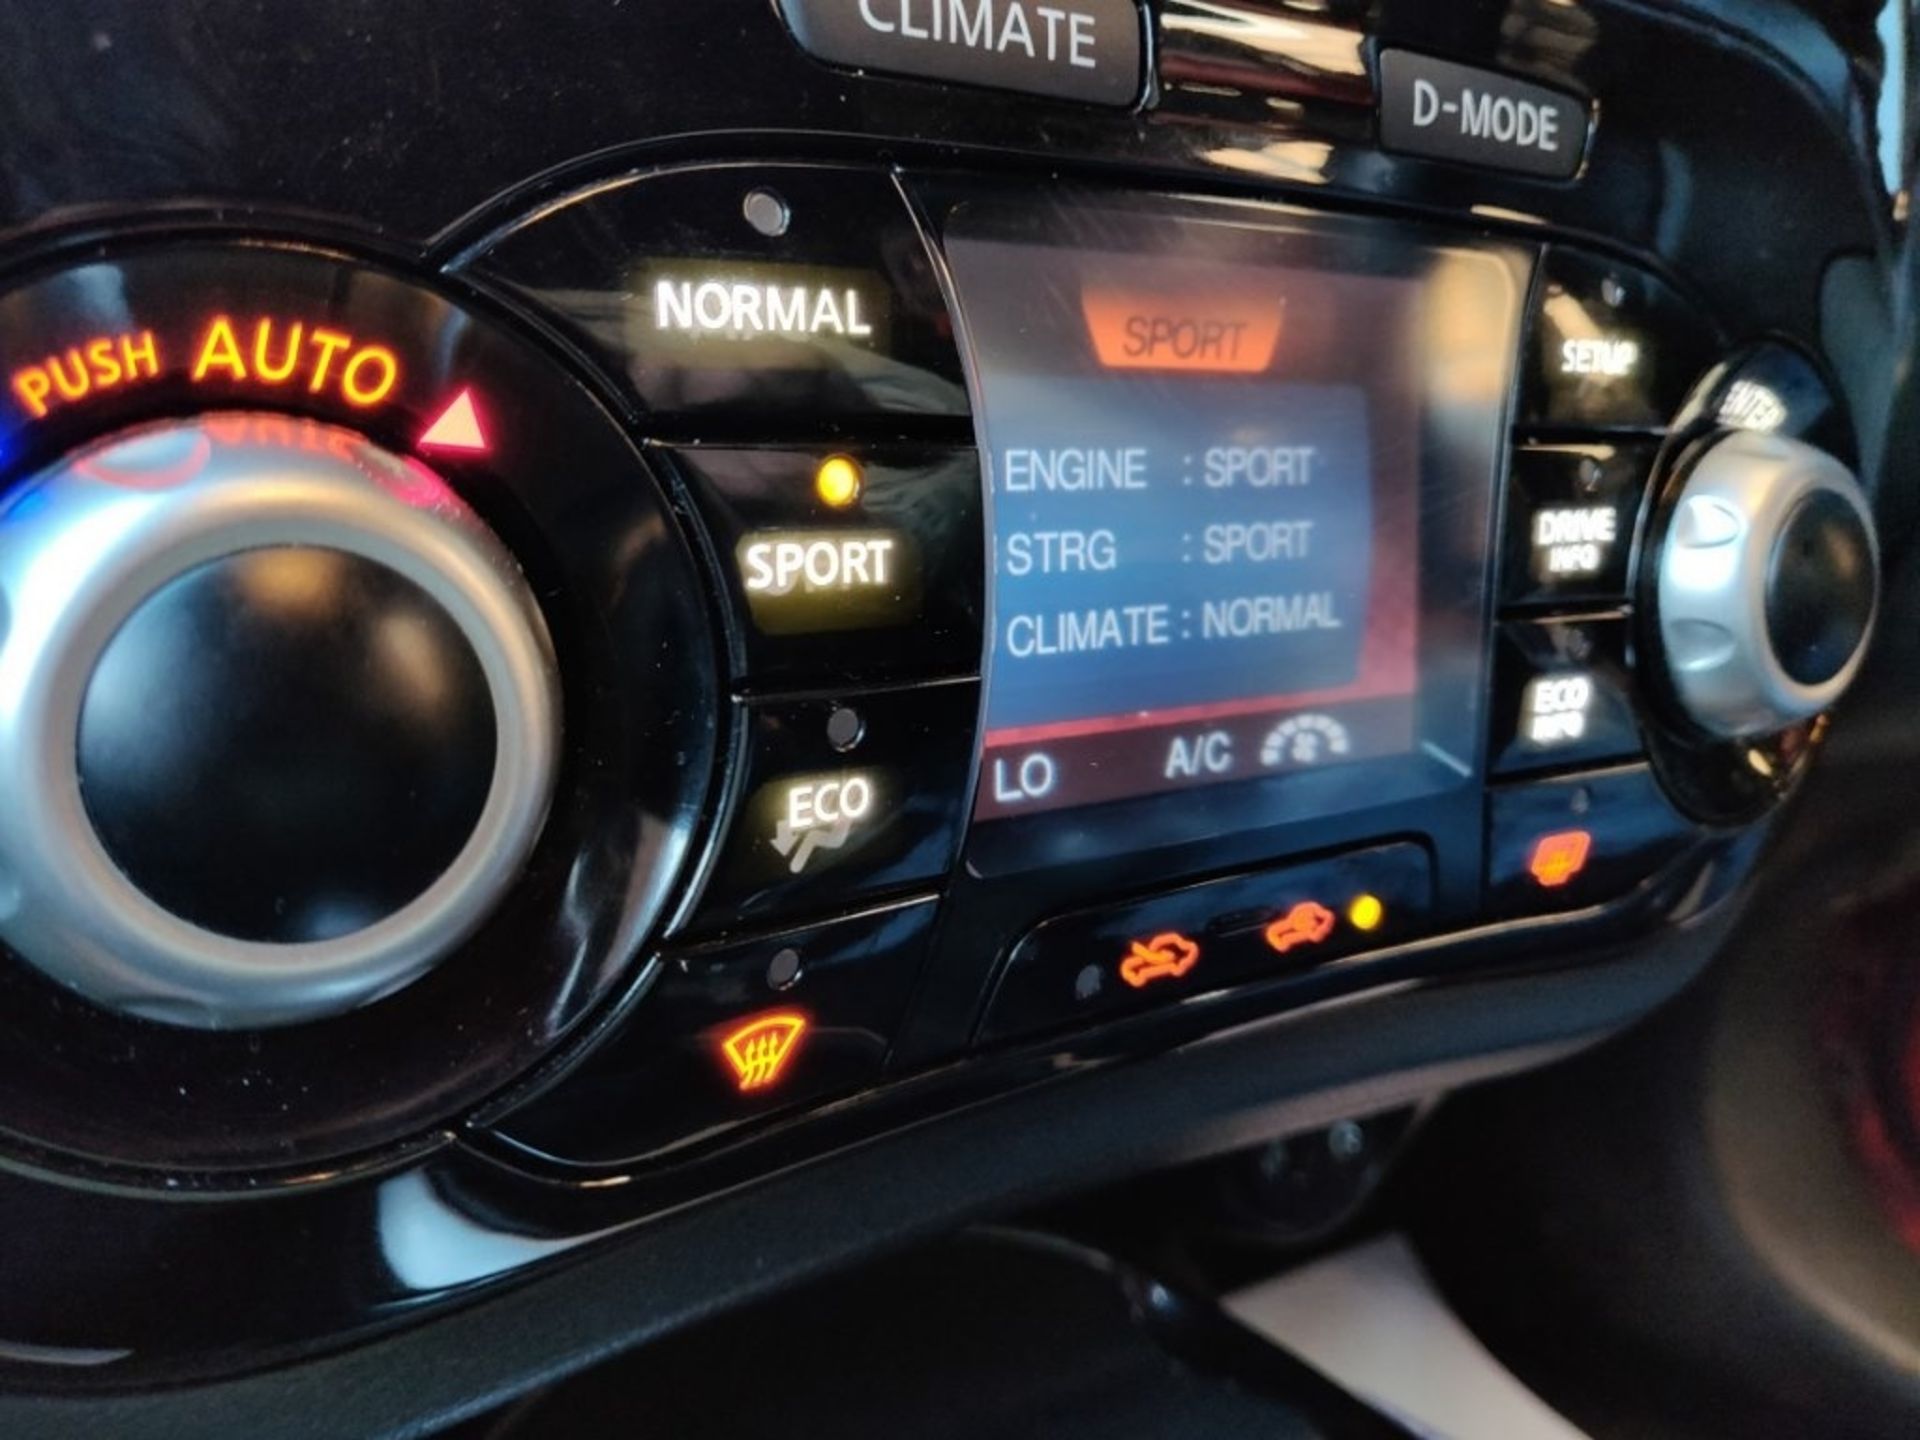 Nissan Juke 1.5 dci Acenta Premium 5Dr - Manual 2015 - Red - Diesel - 2009 Mileage: 97,000 Reg: SY15 - Image 8 of 8